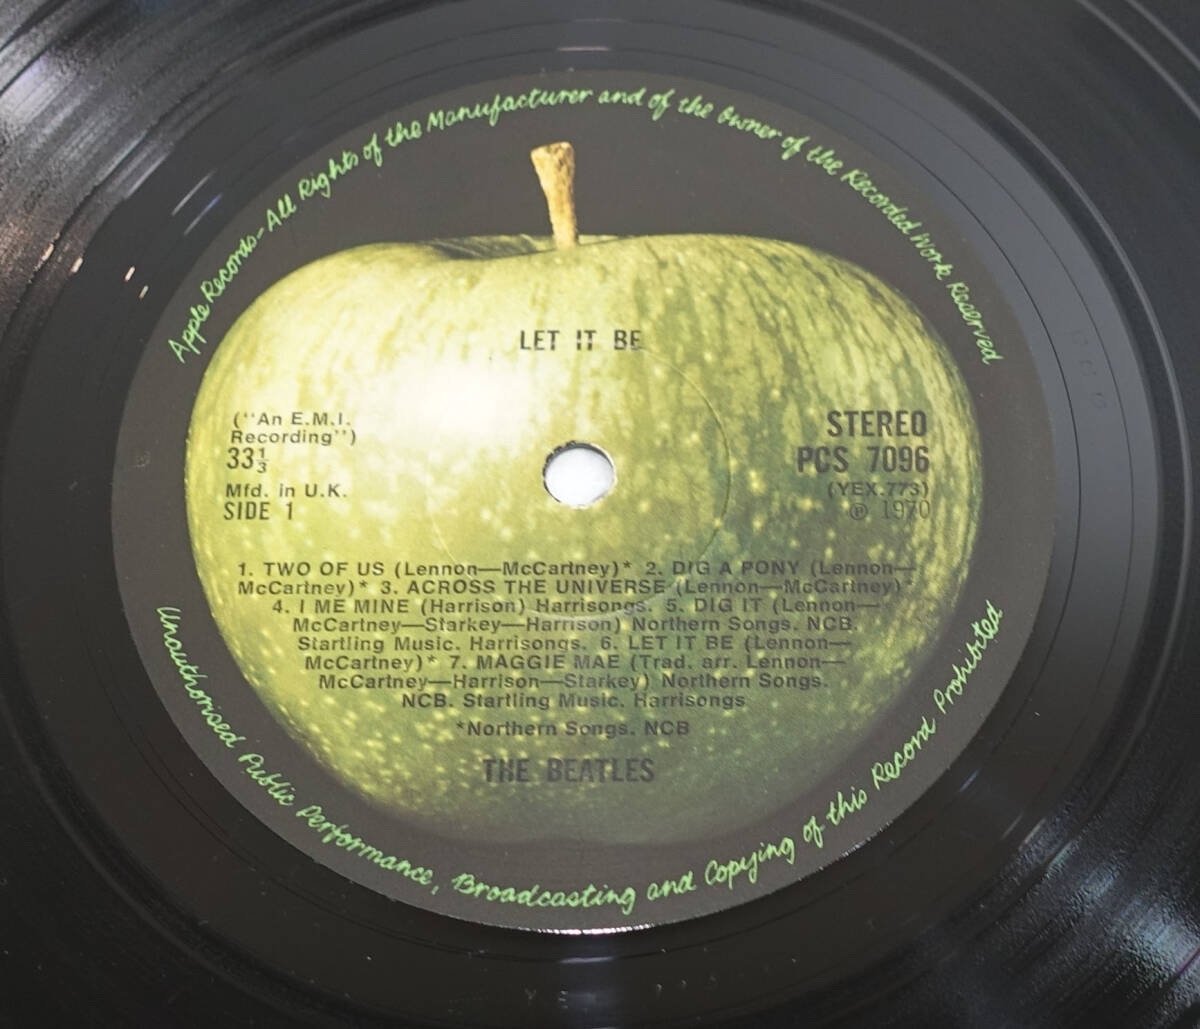 UK Original 初回 APPLE PCS 7096 LET IT BE / The Beatles MAT:2U/3U+Red Apple_画像7